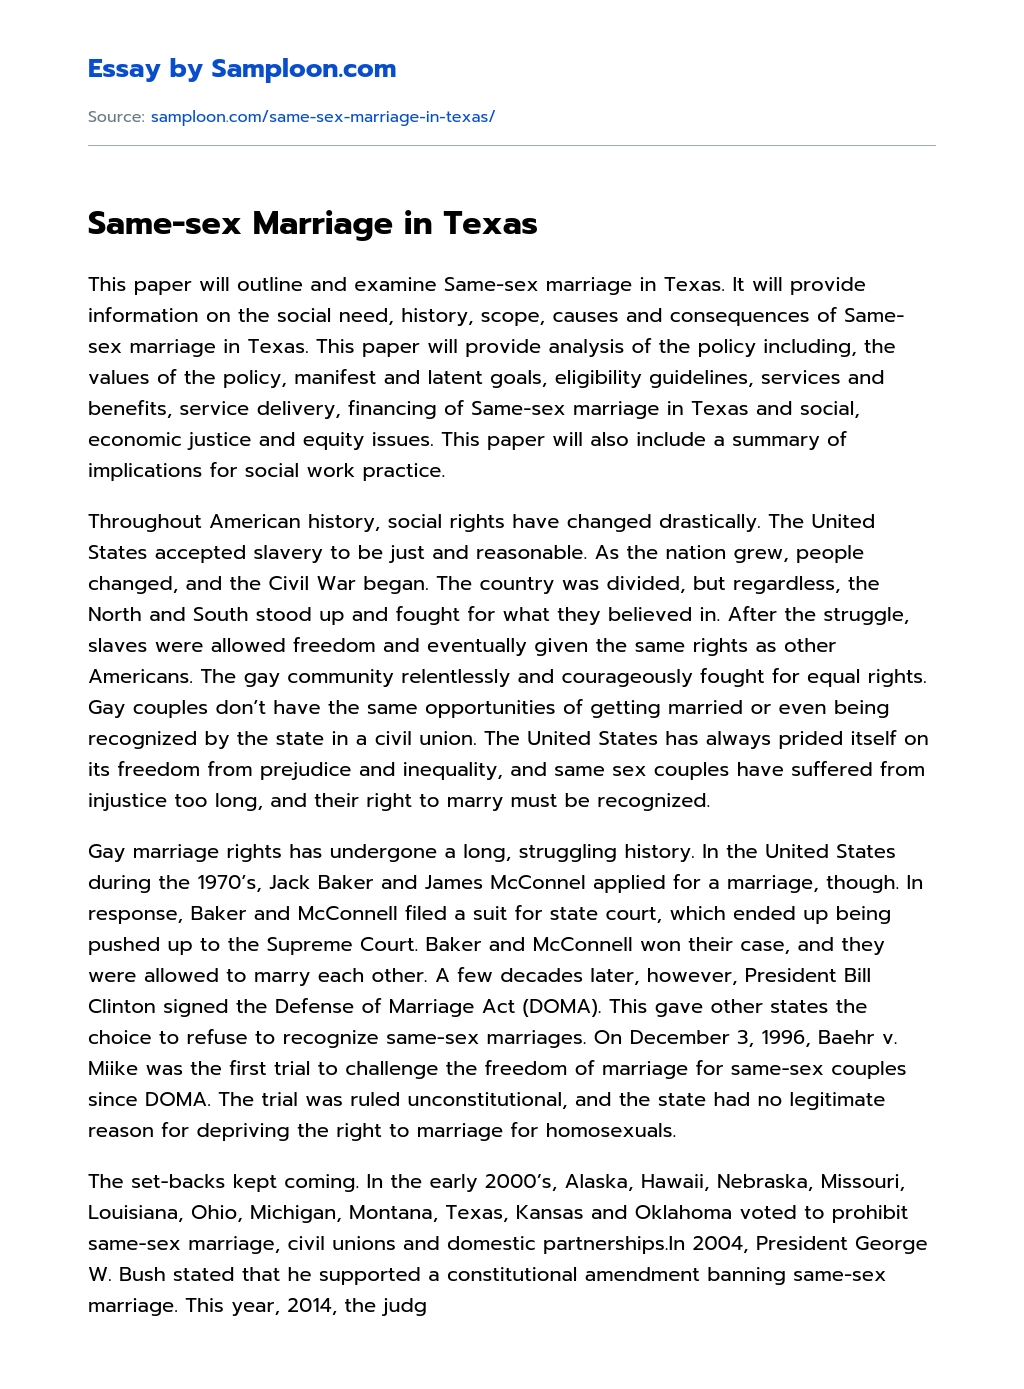 Same-sex Marriage in Texas Argumentative Essay essay